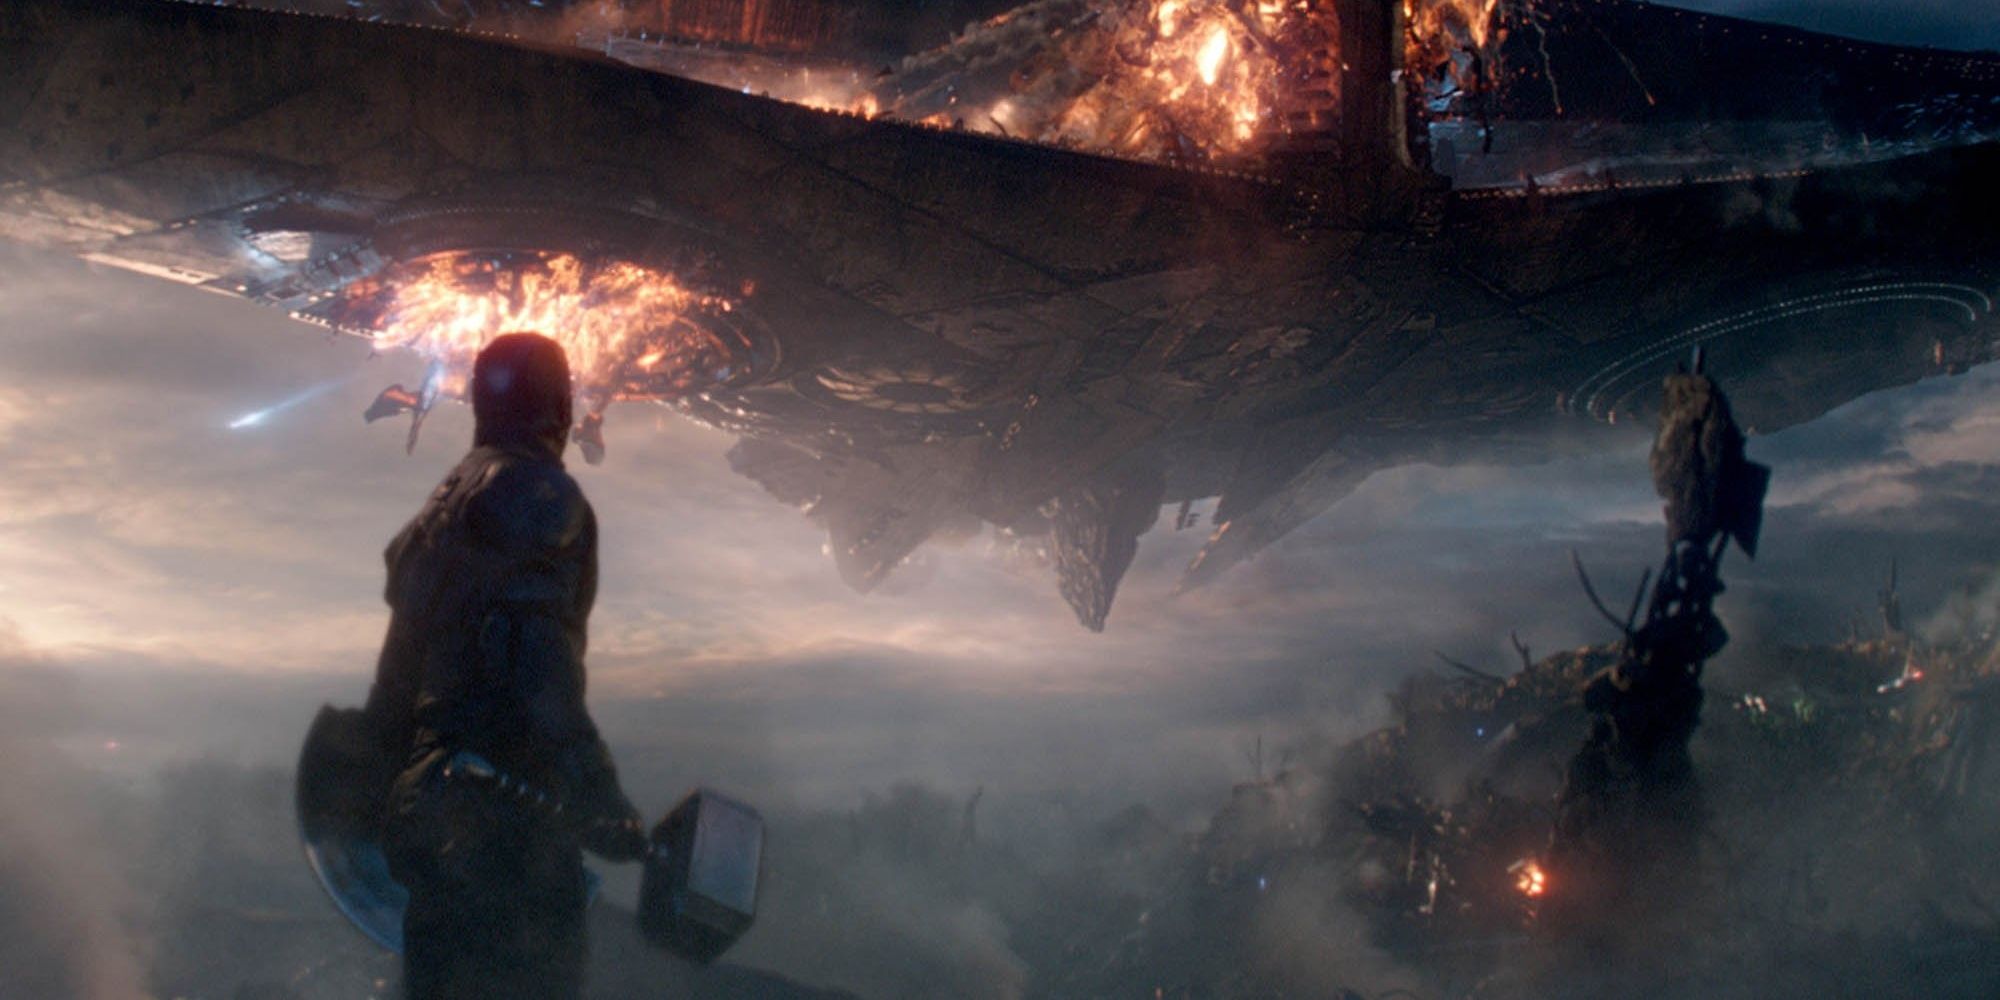 Captain America watches Thanos' ship over the rubble